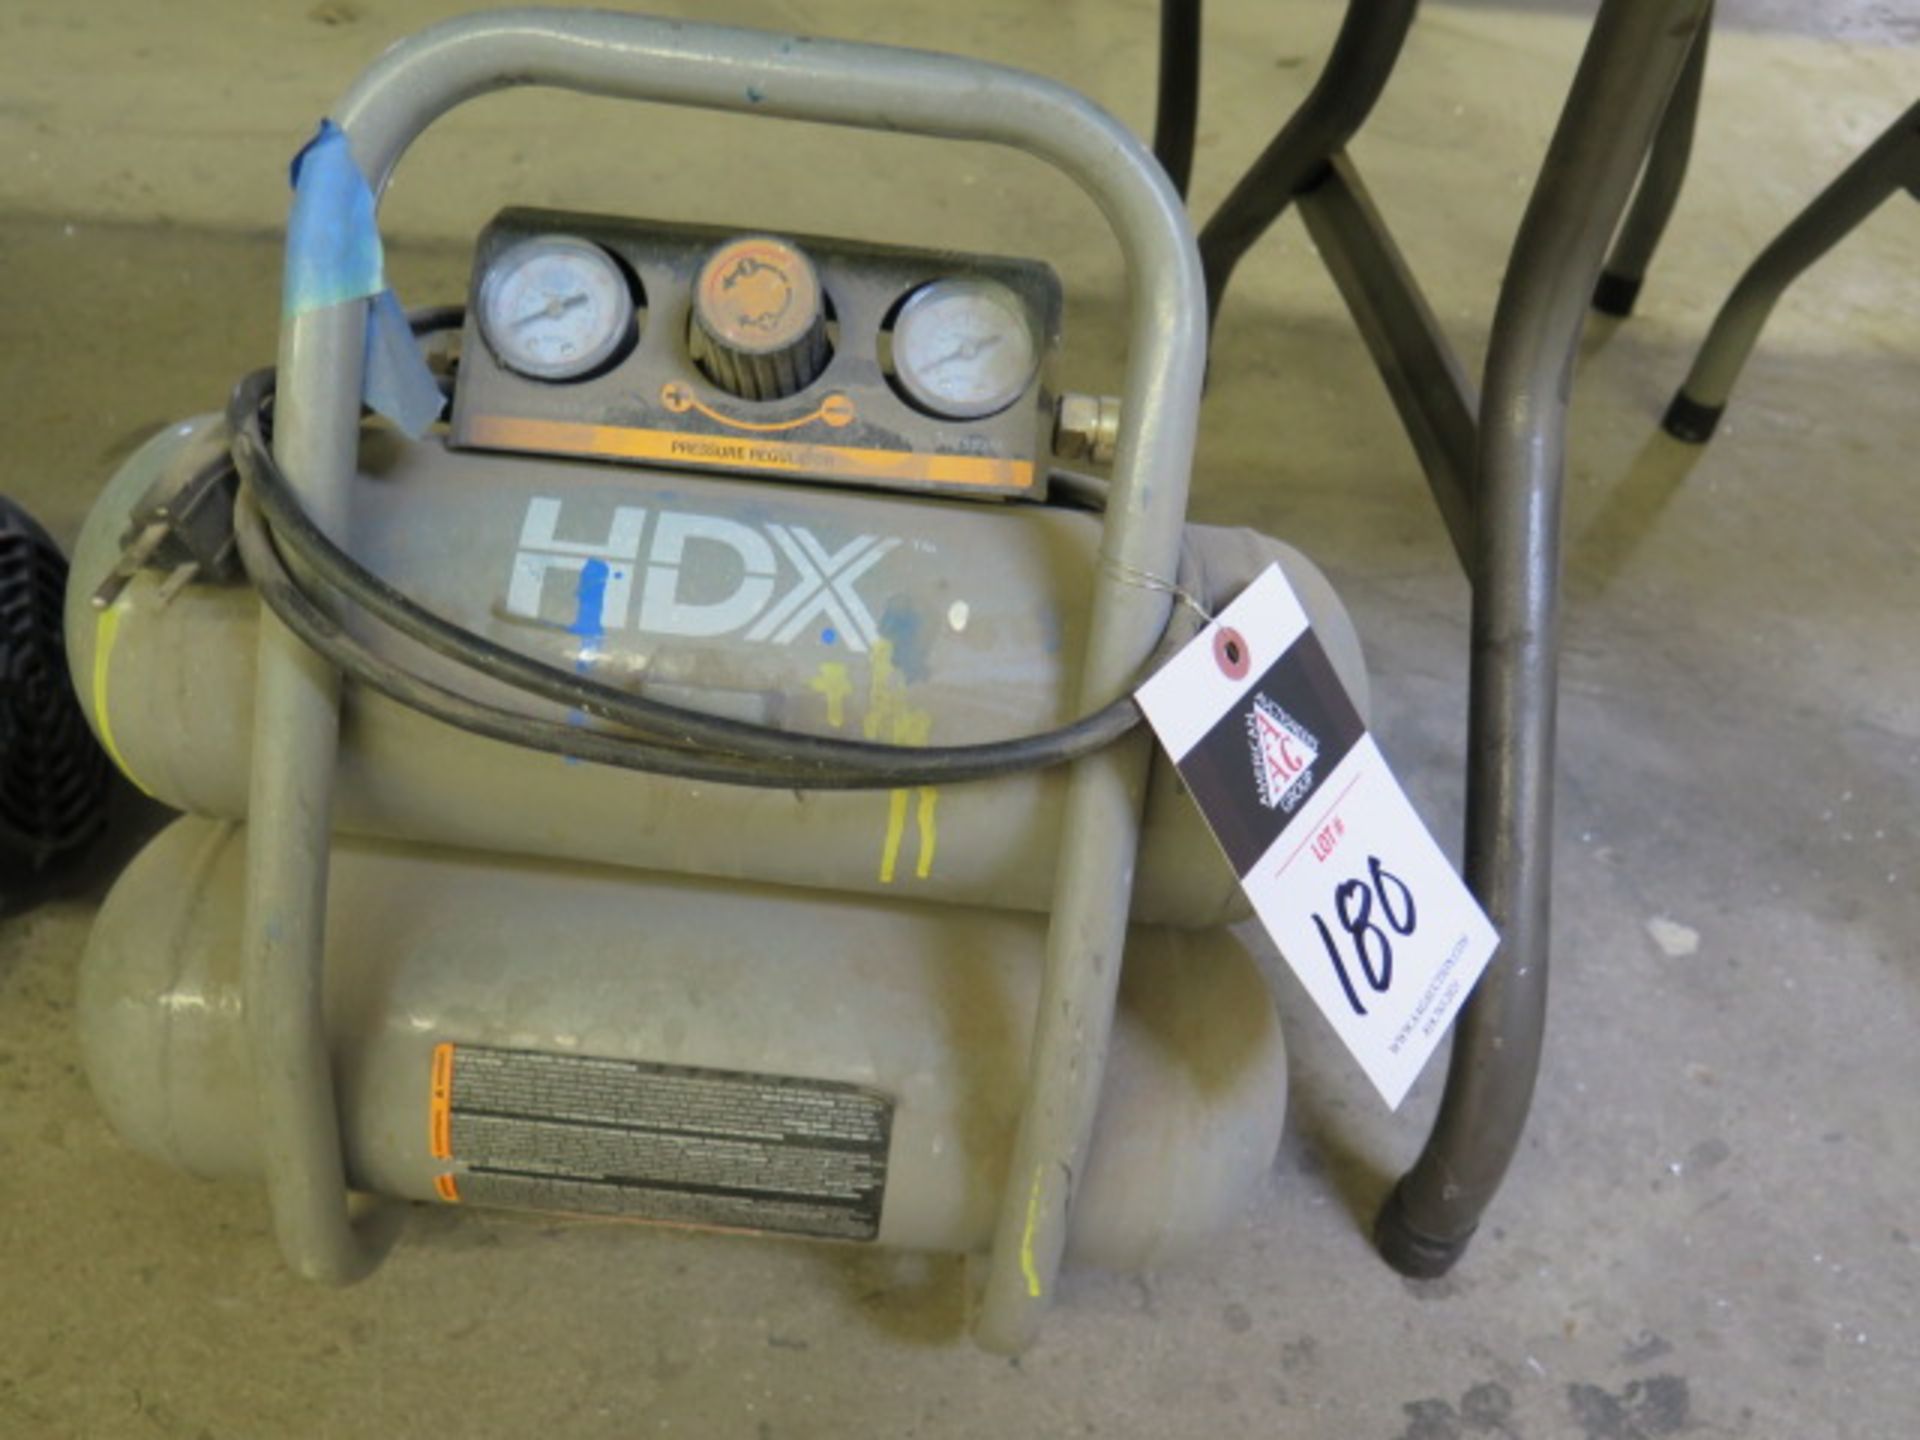 HDX Portable Air Compressor (SOLD AS-IS - NO WARRANTY)